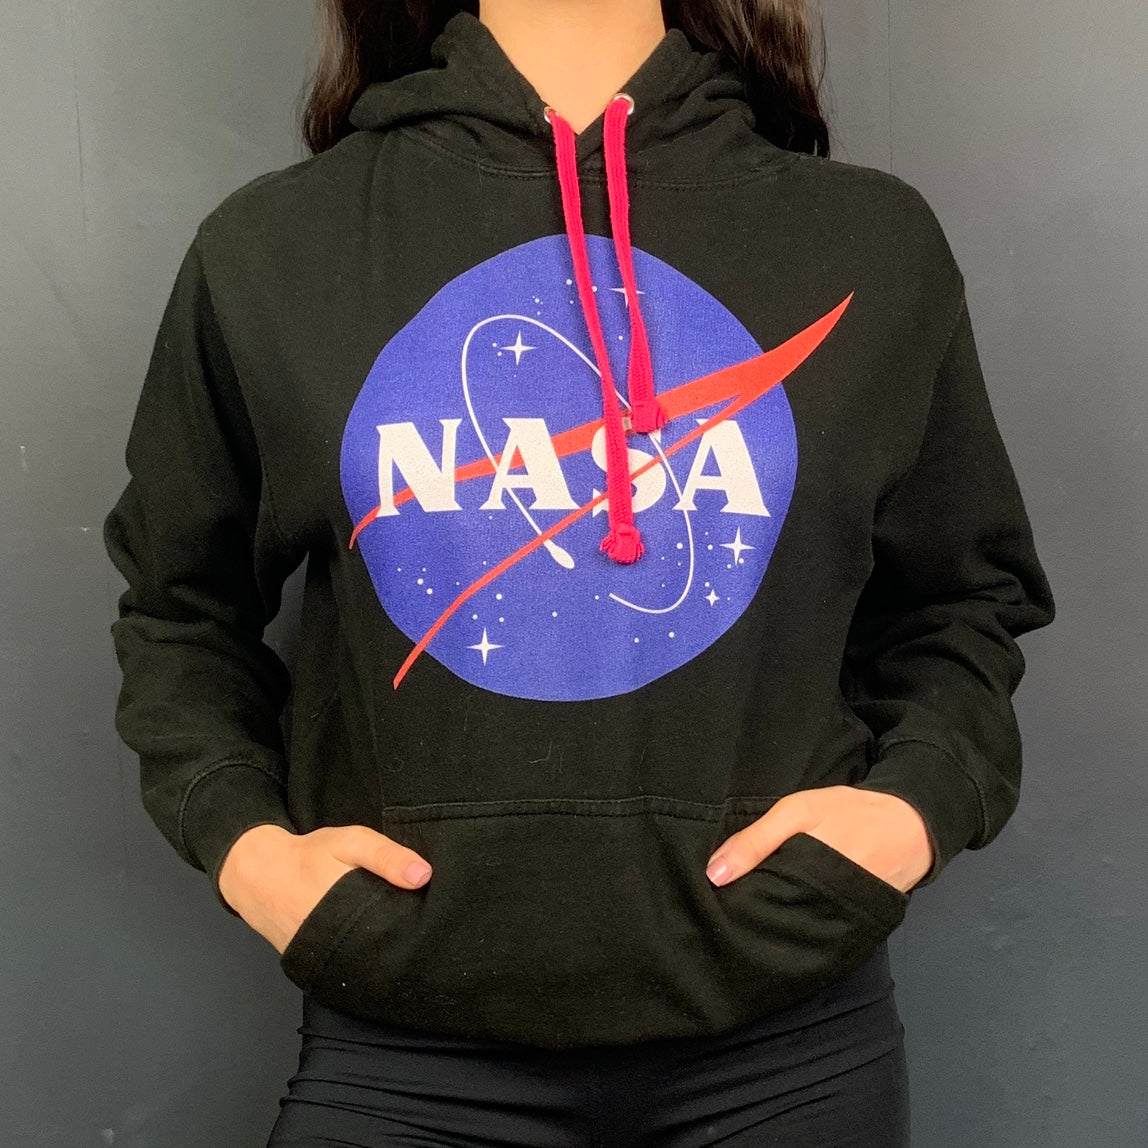 NASA Hoodie with Pink Hood - Small